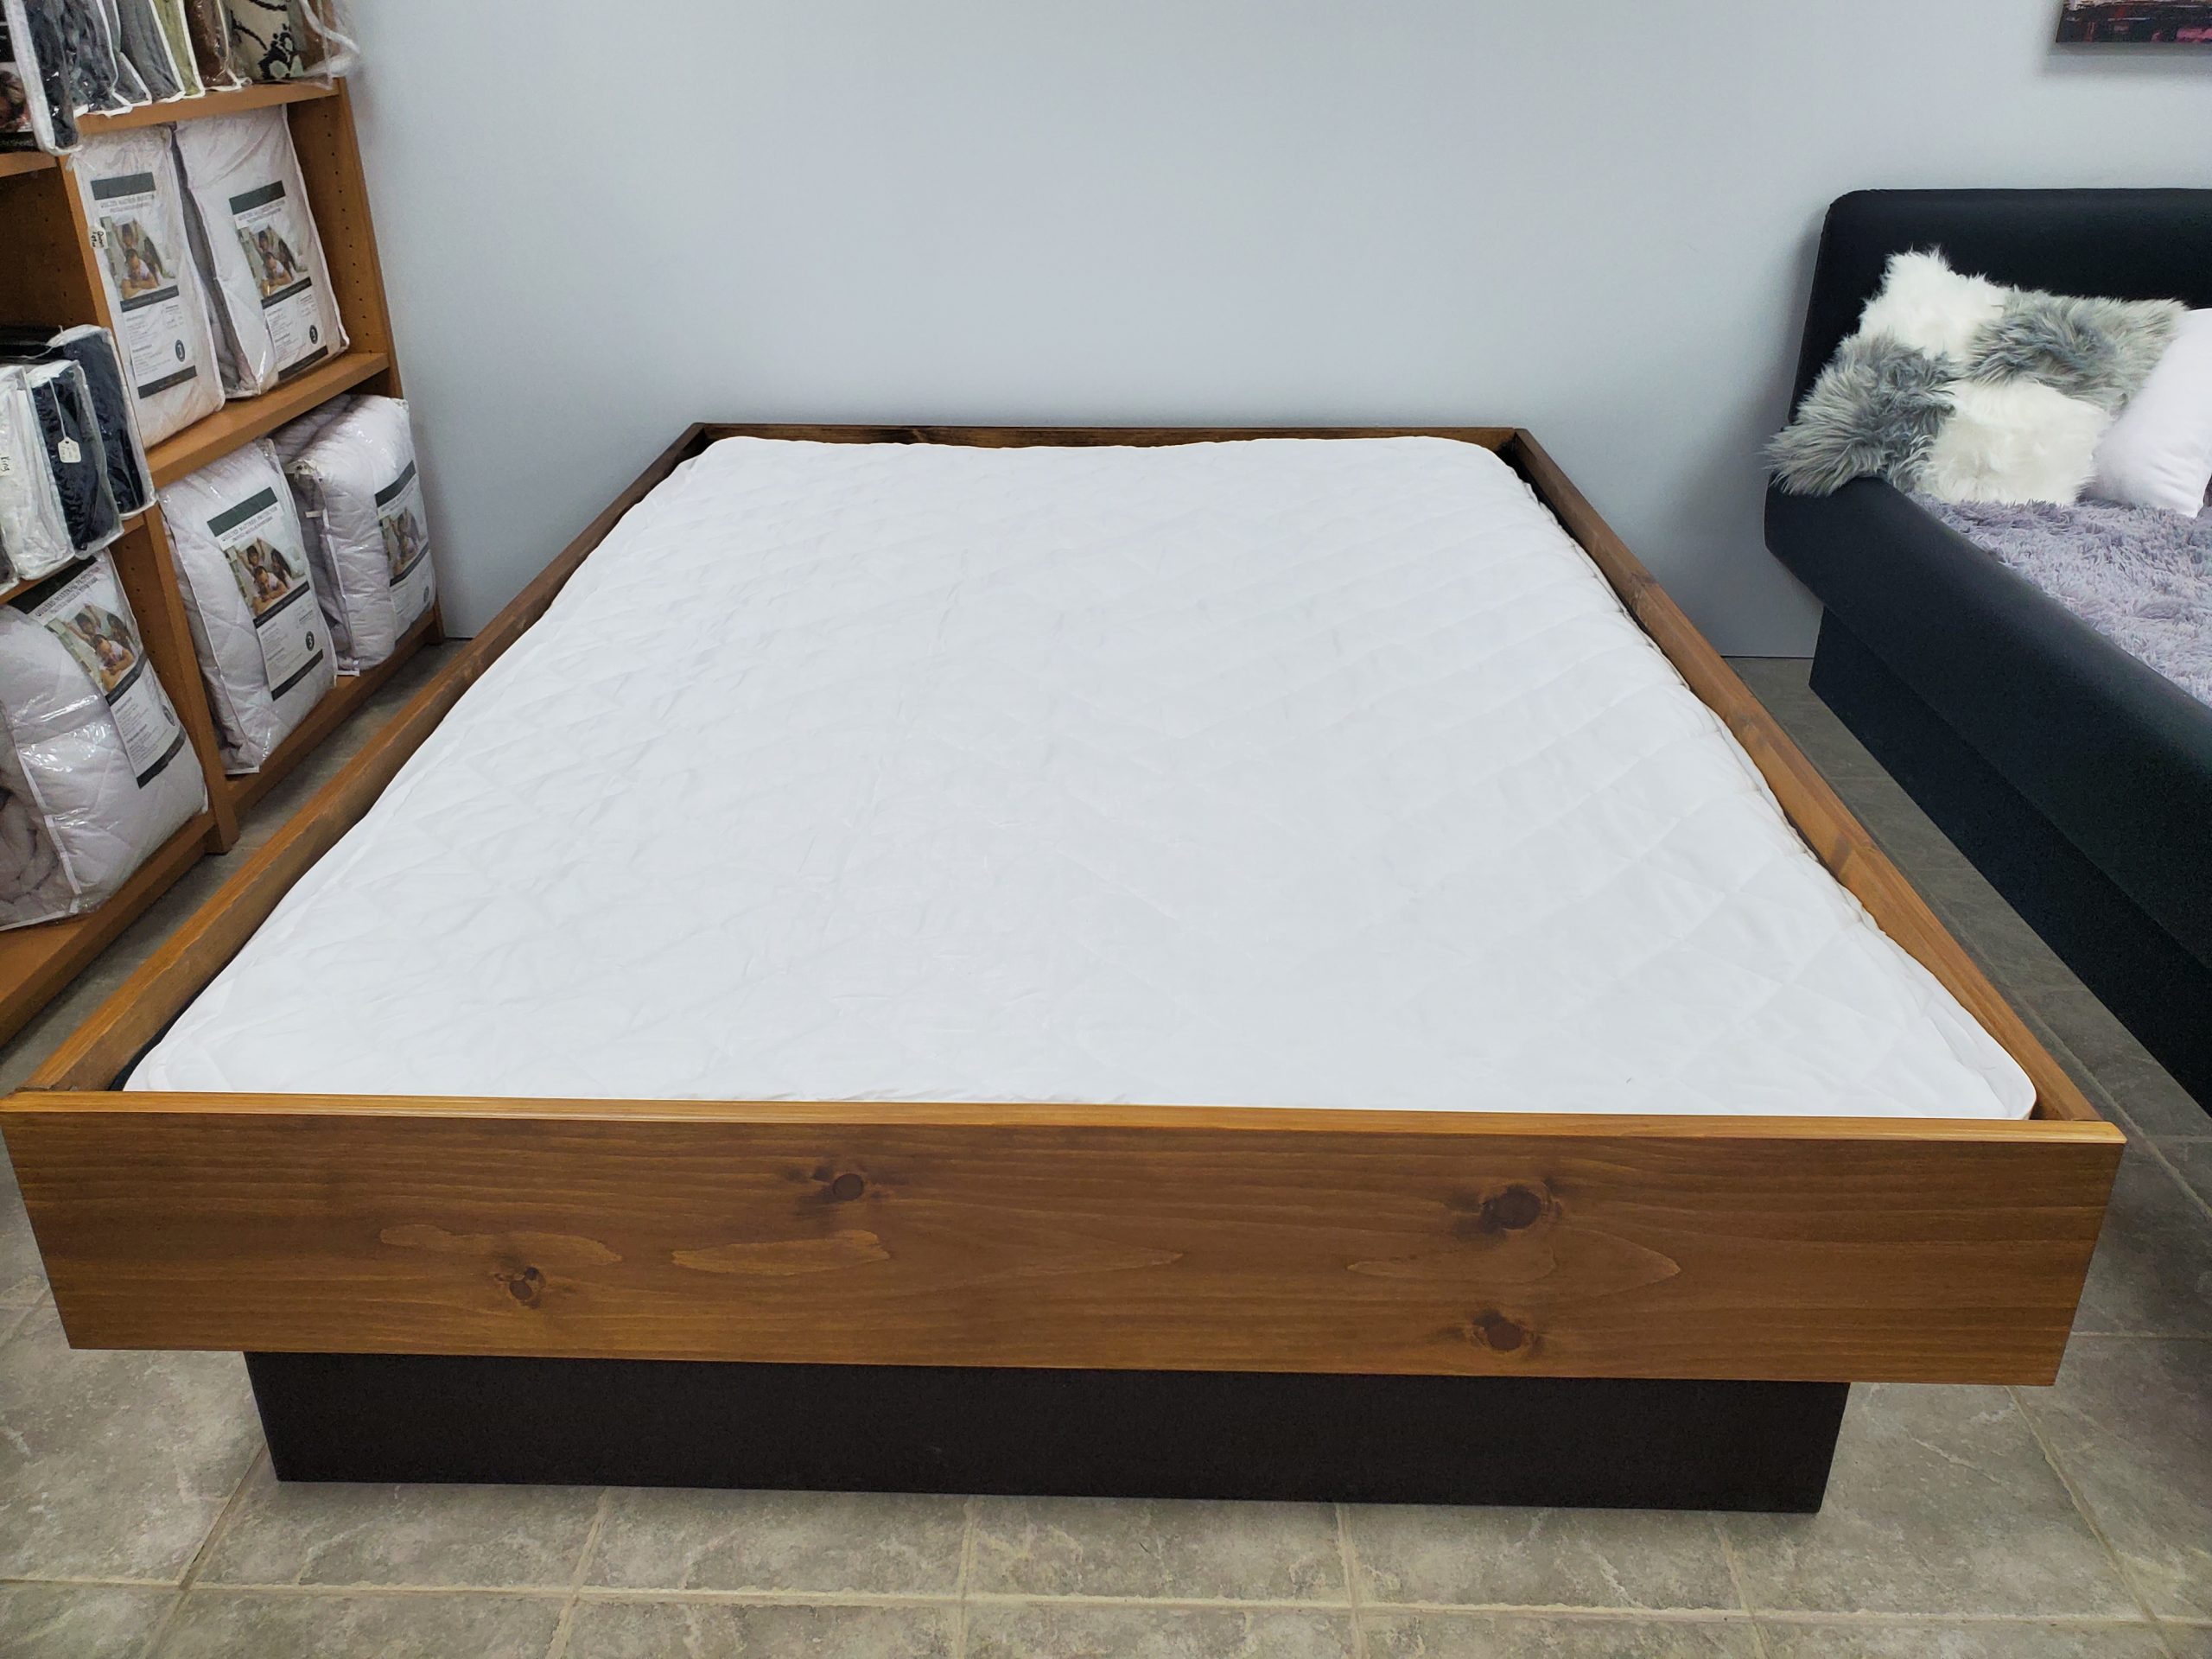 mattress pad under sheets